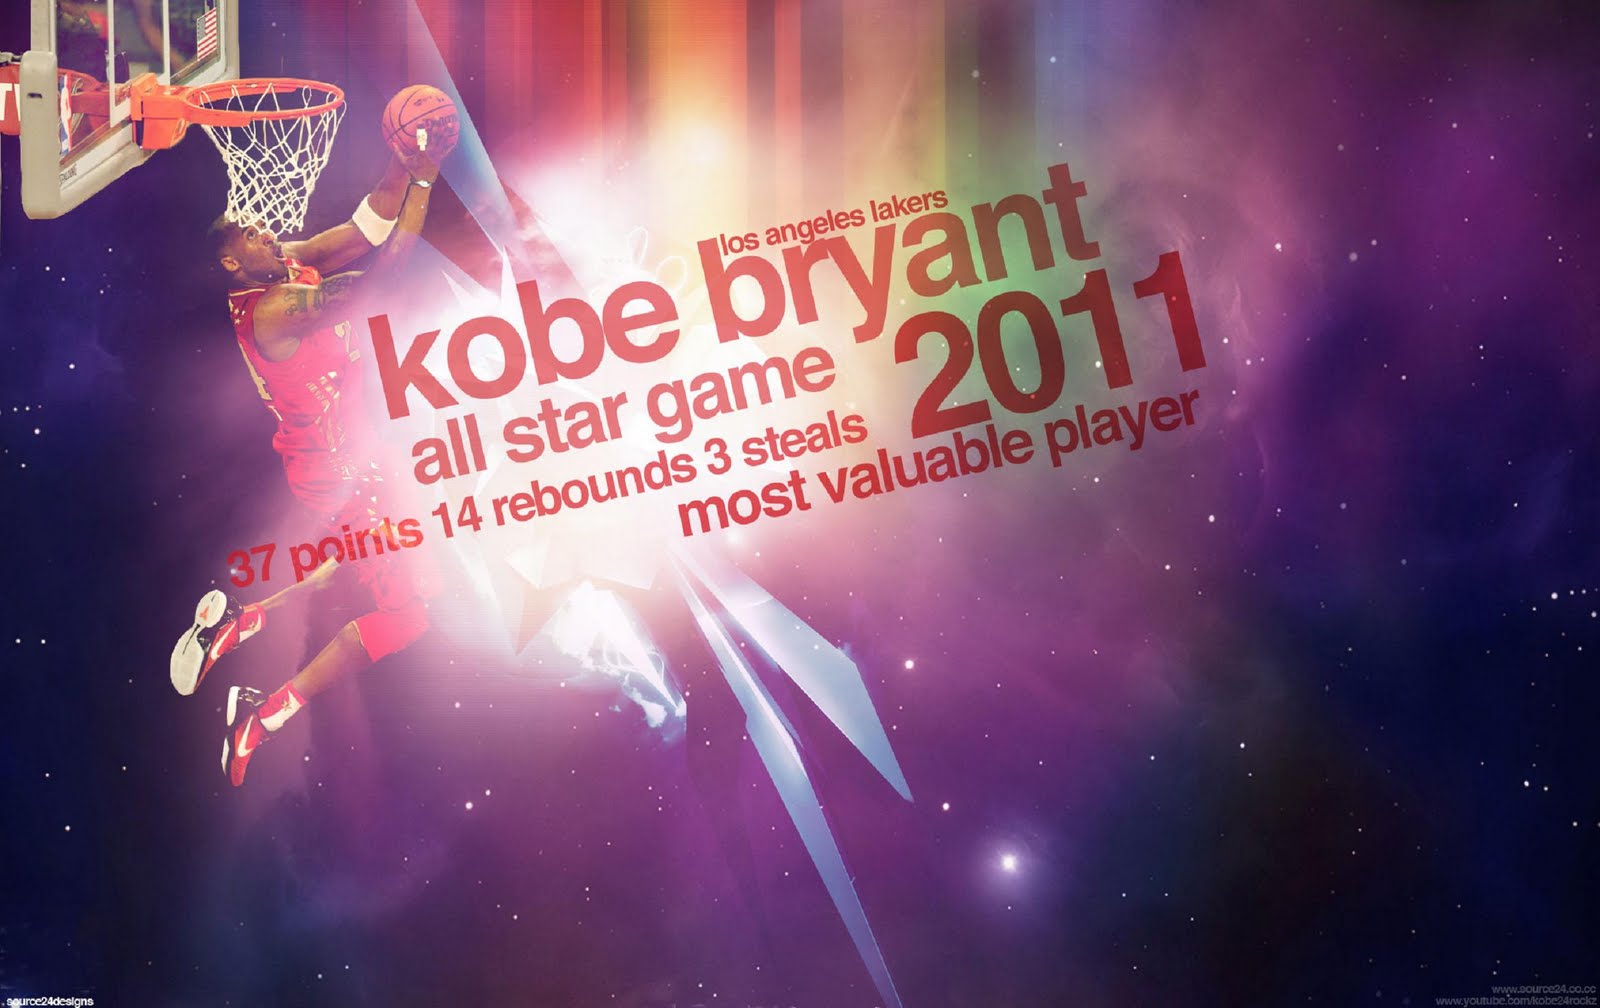 http://1.bp.blogspot.com/-VACbsI6DuYM/TiWEg1q6DMI/AAAAAAAAA9U/TzifUU3uUrY/s1600/Kobe-Bryant-2011-NBA-All-Star-MVP-Wallpaper.jpg